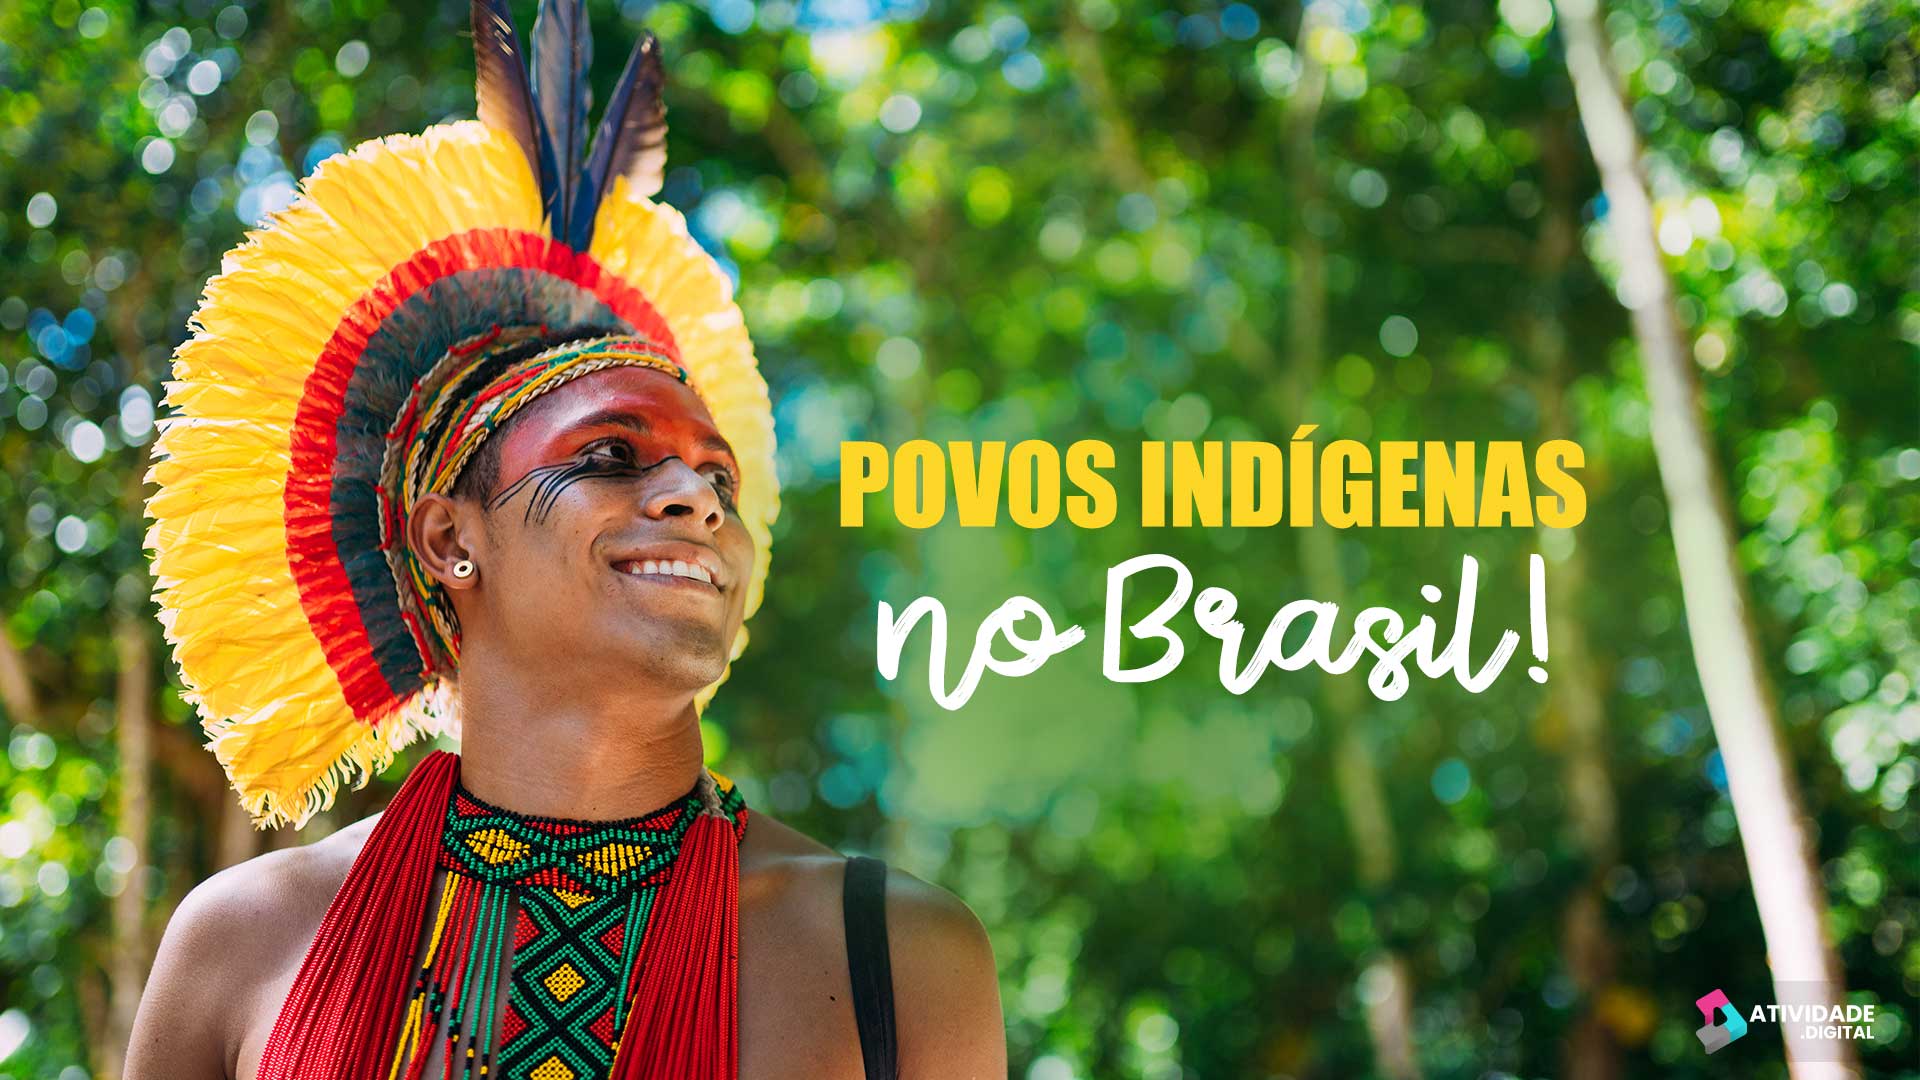 Povos indígenas no Brasil!